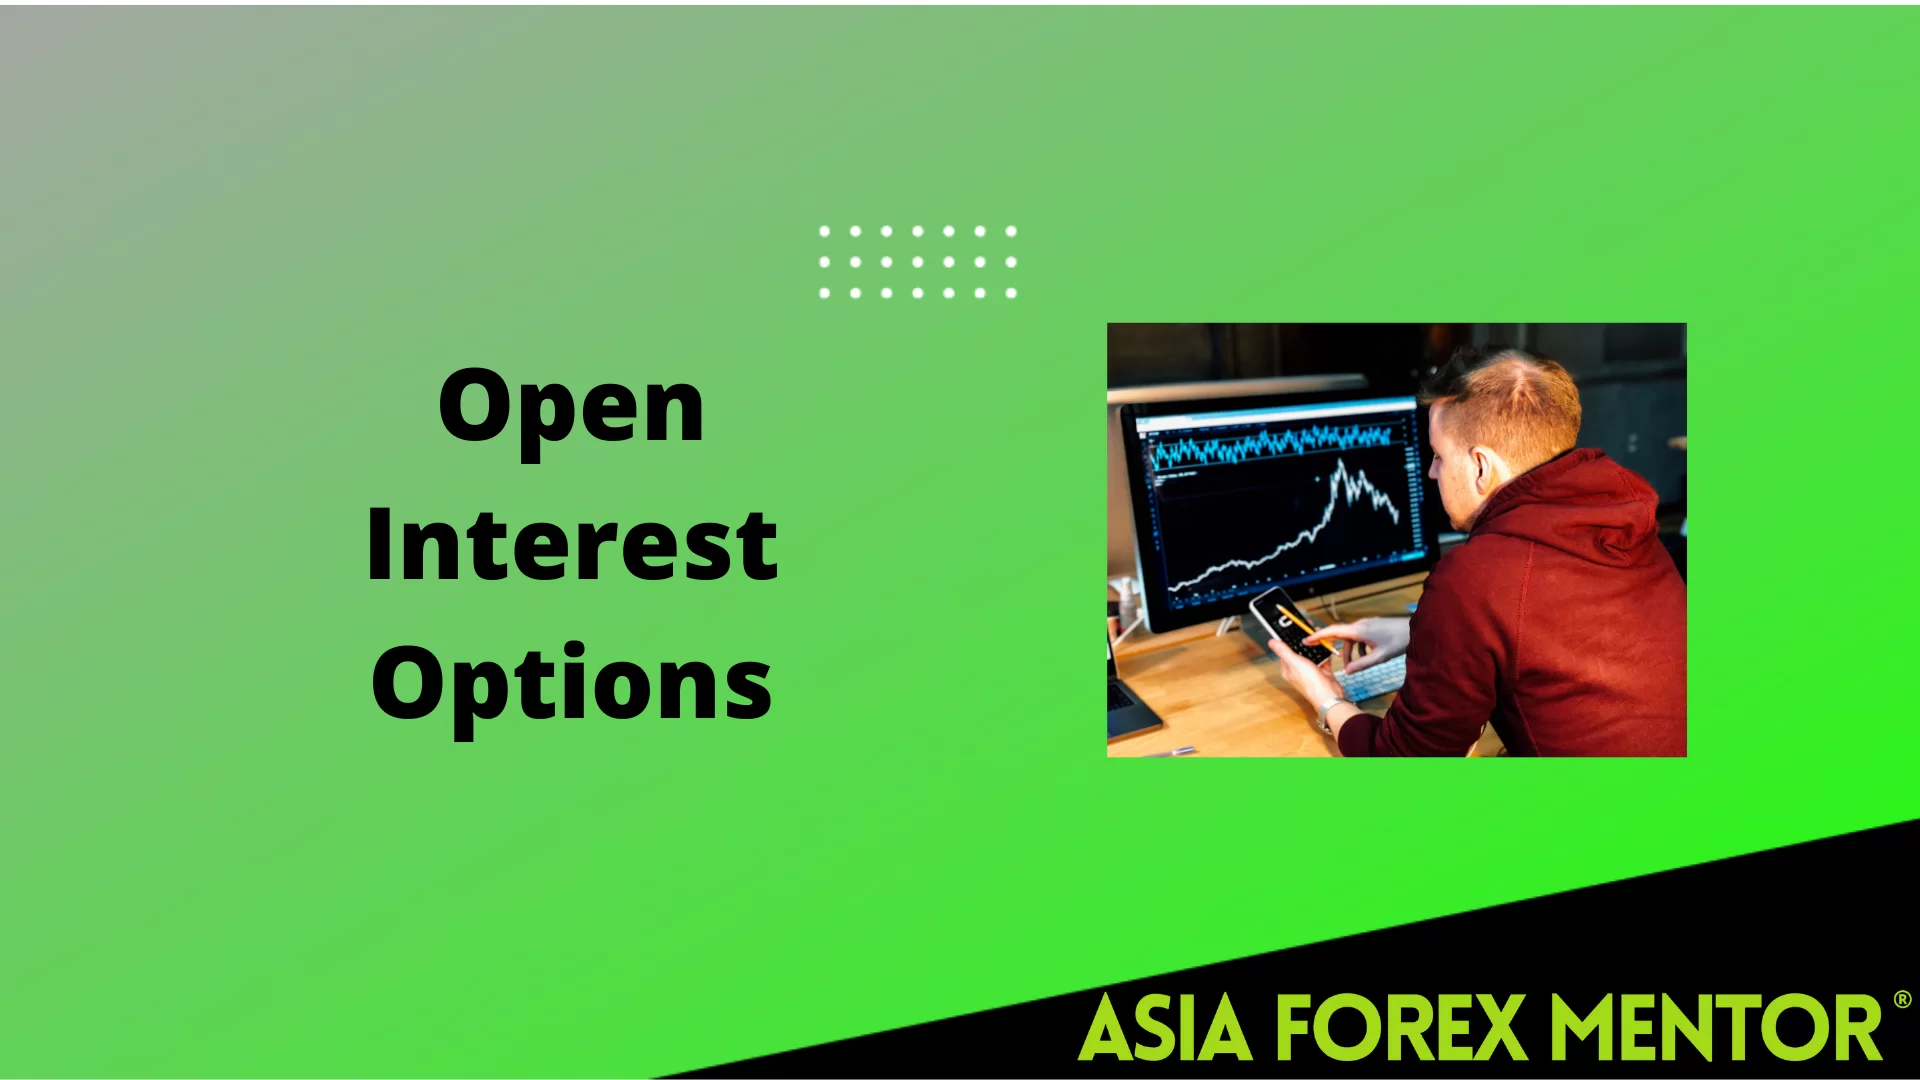 Open Interest Options